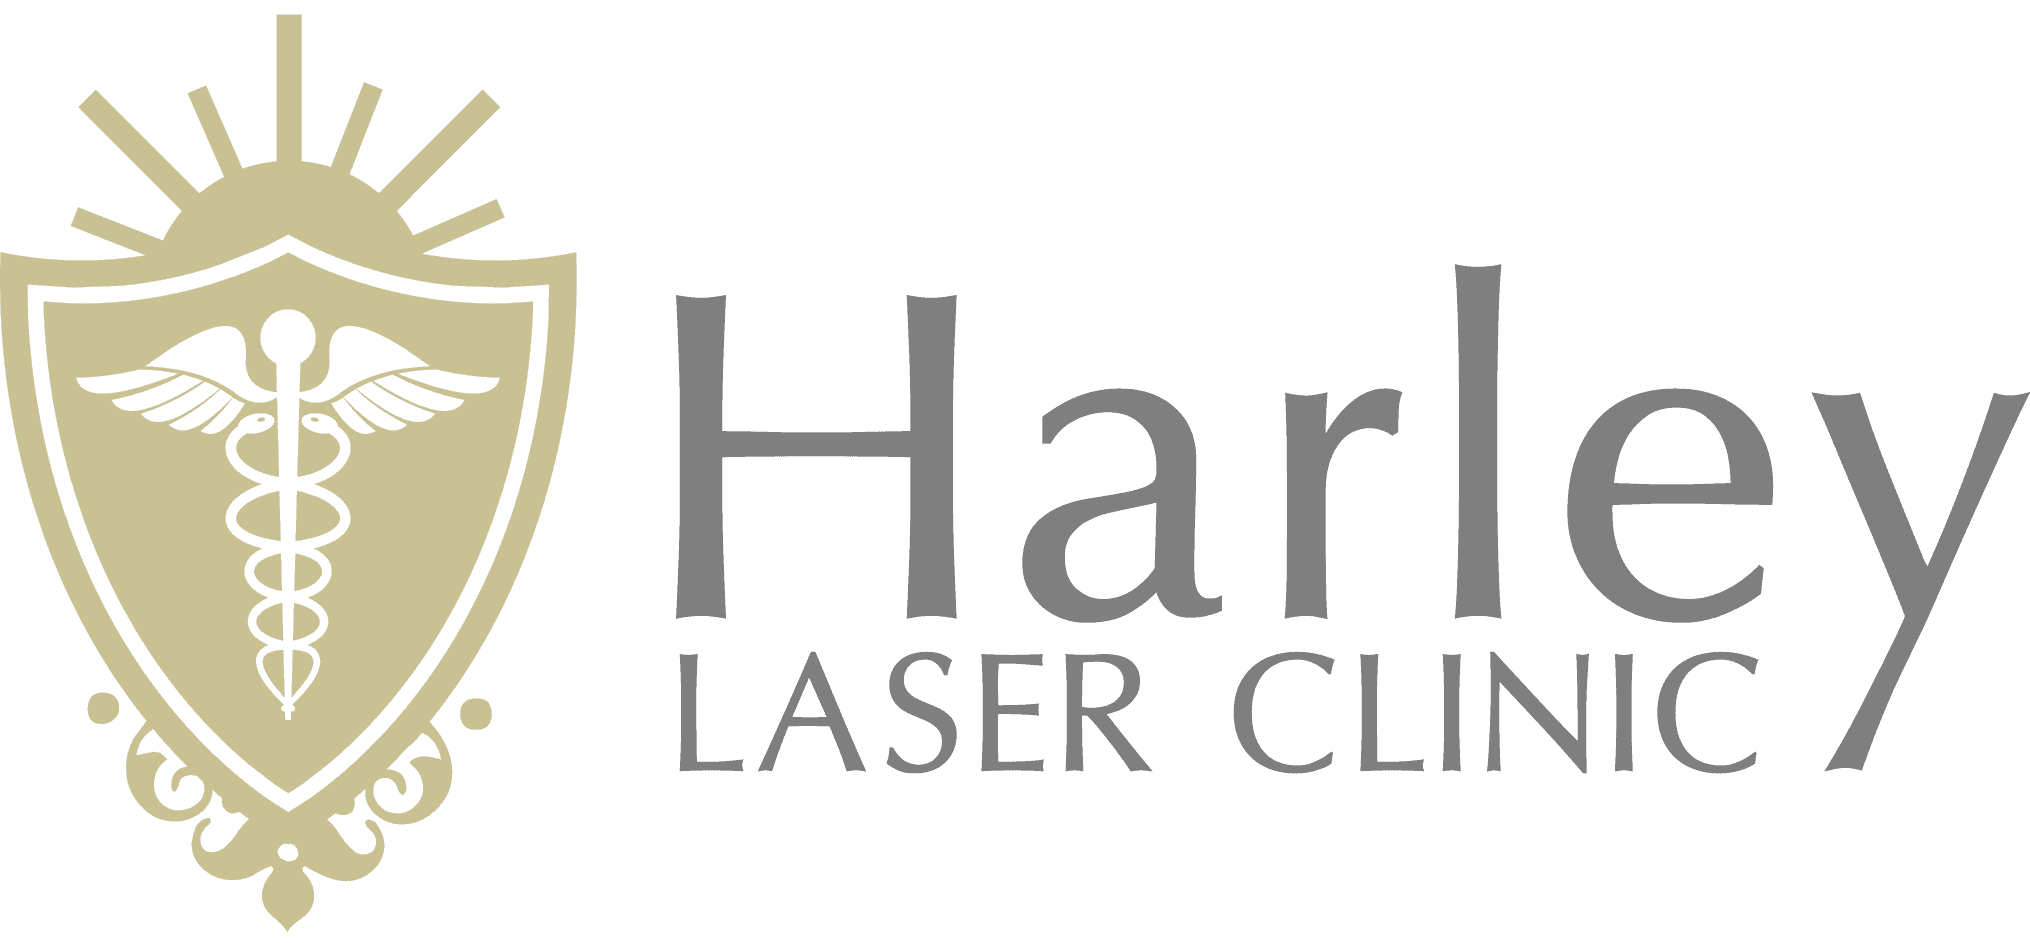 Harley Laser Clinic logo